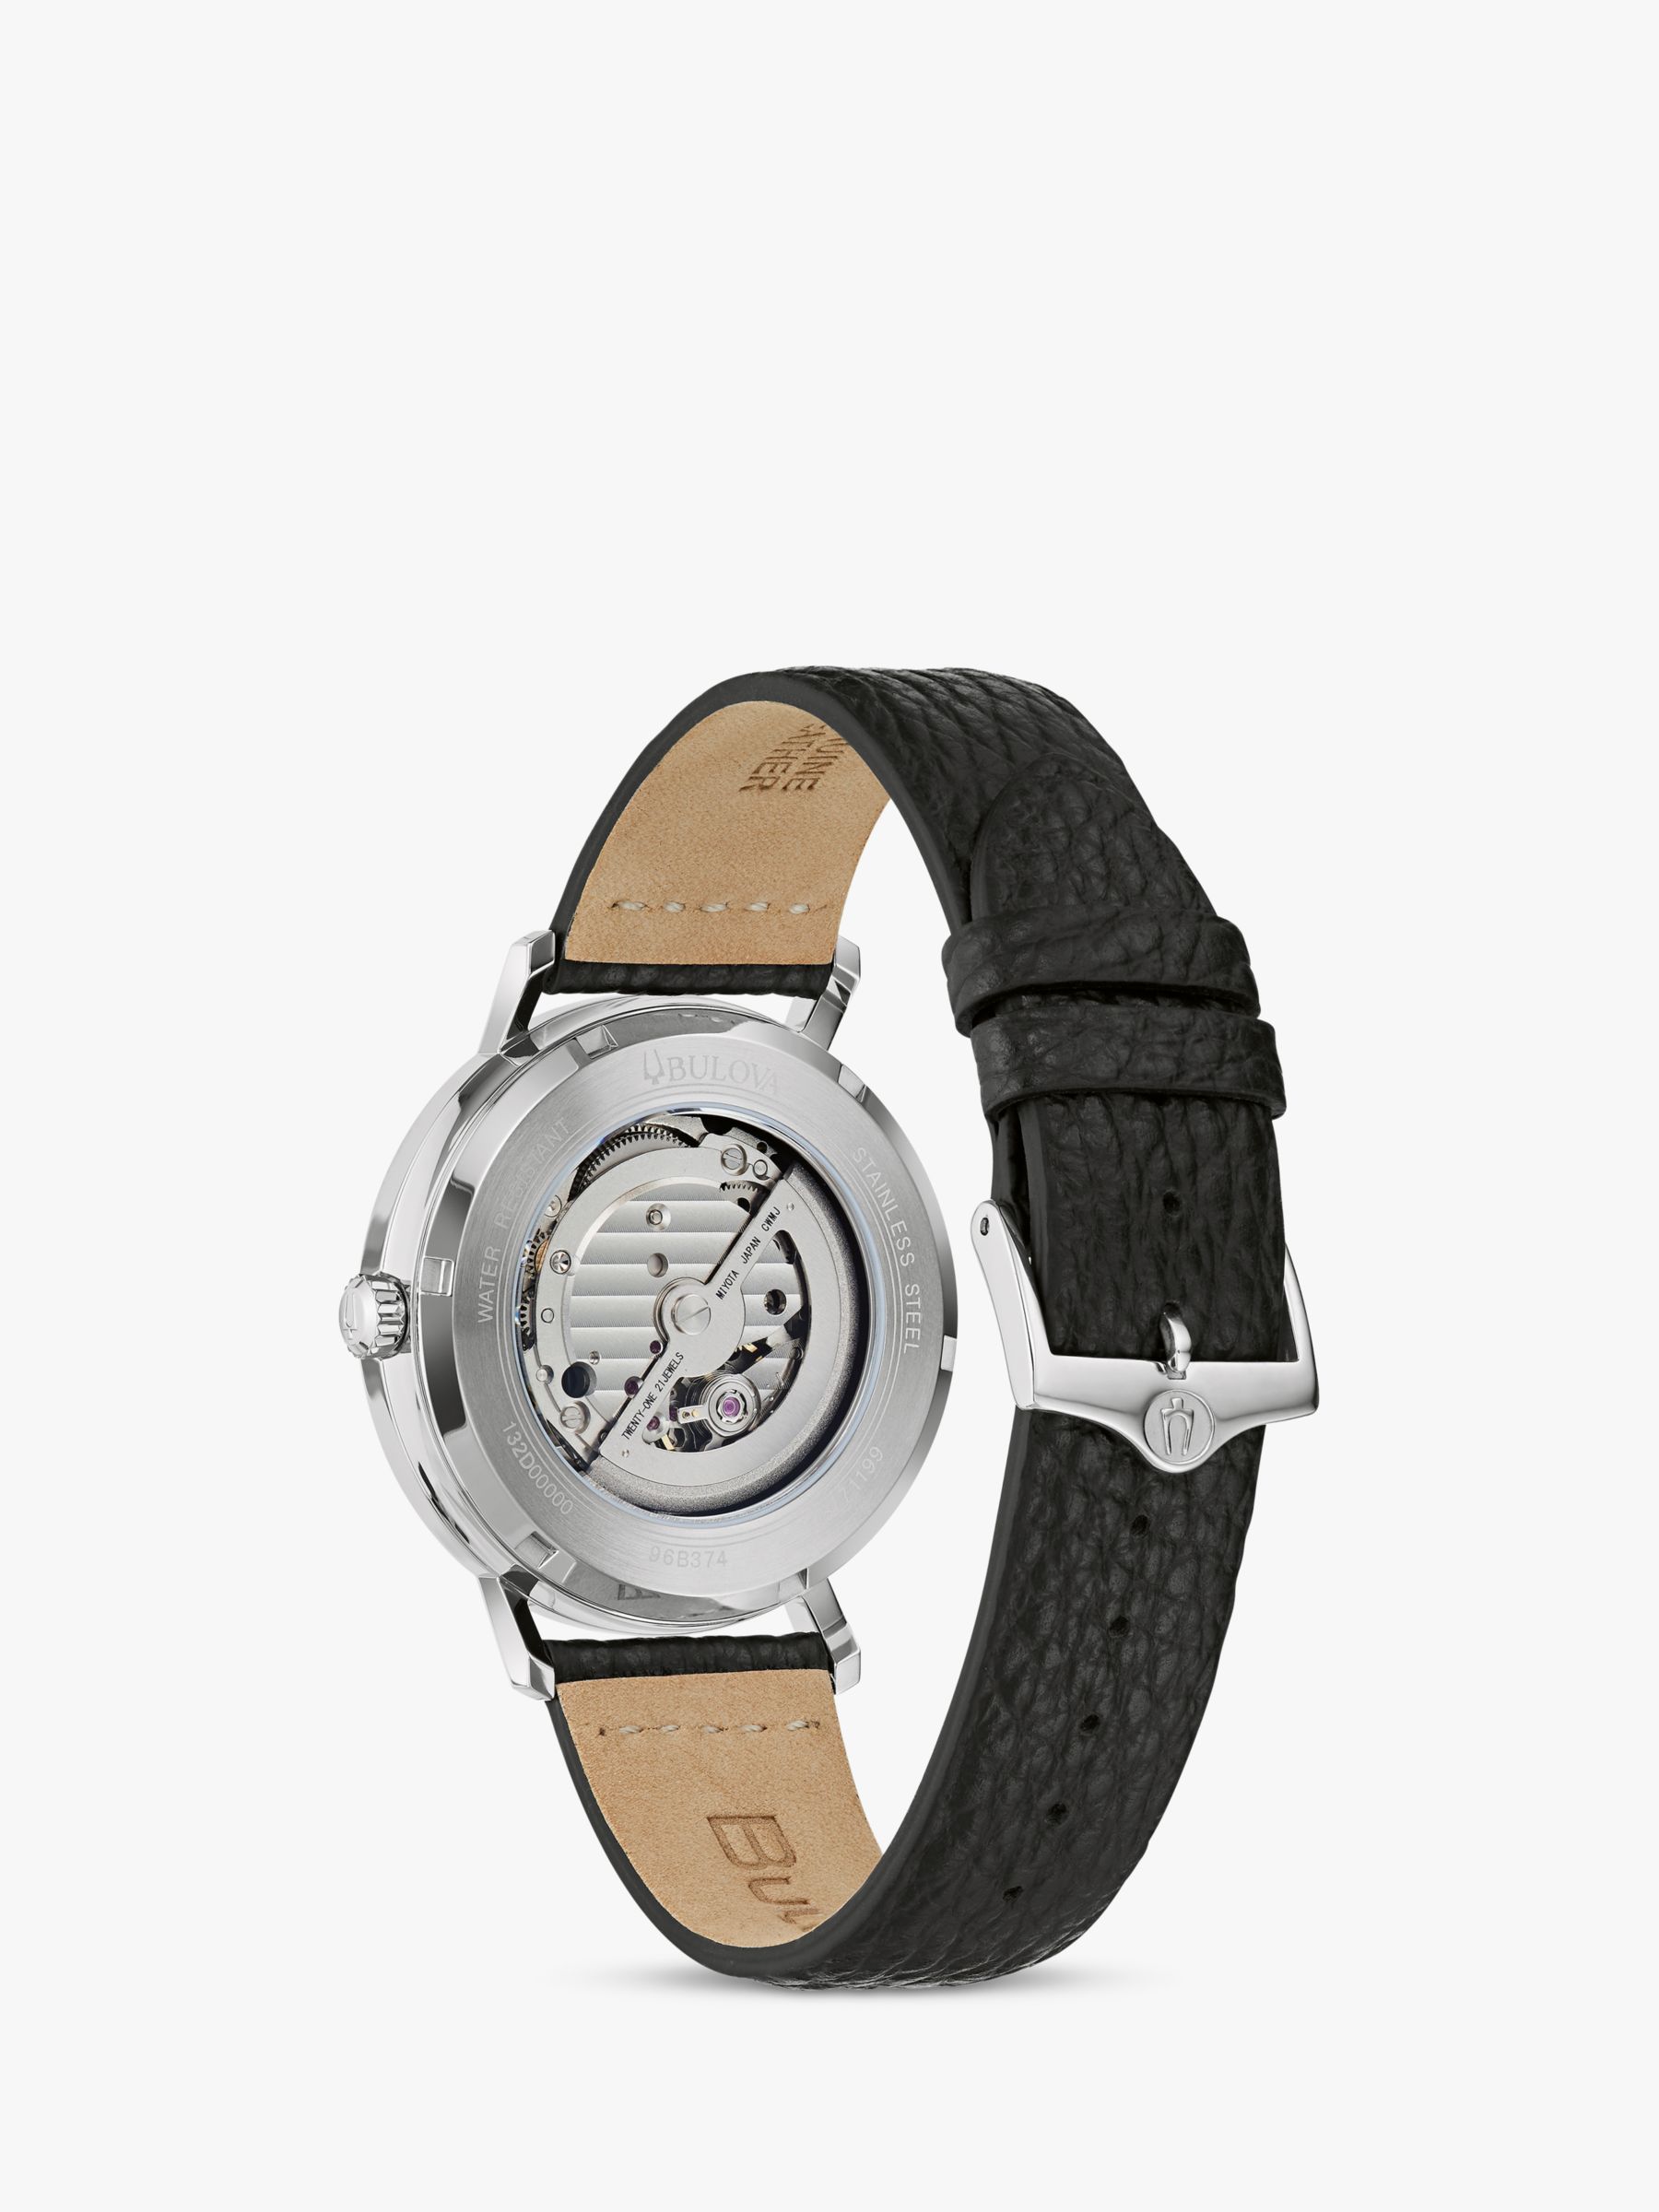 Bulova Men's Aerojet Automatic Date Leather Strap Watch, Black/Blue 96B374